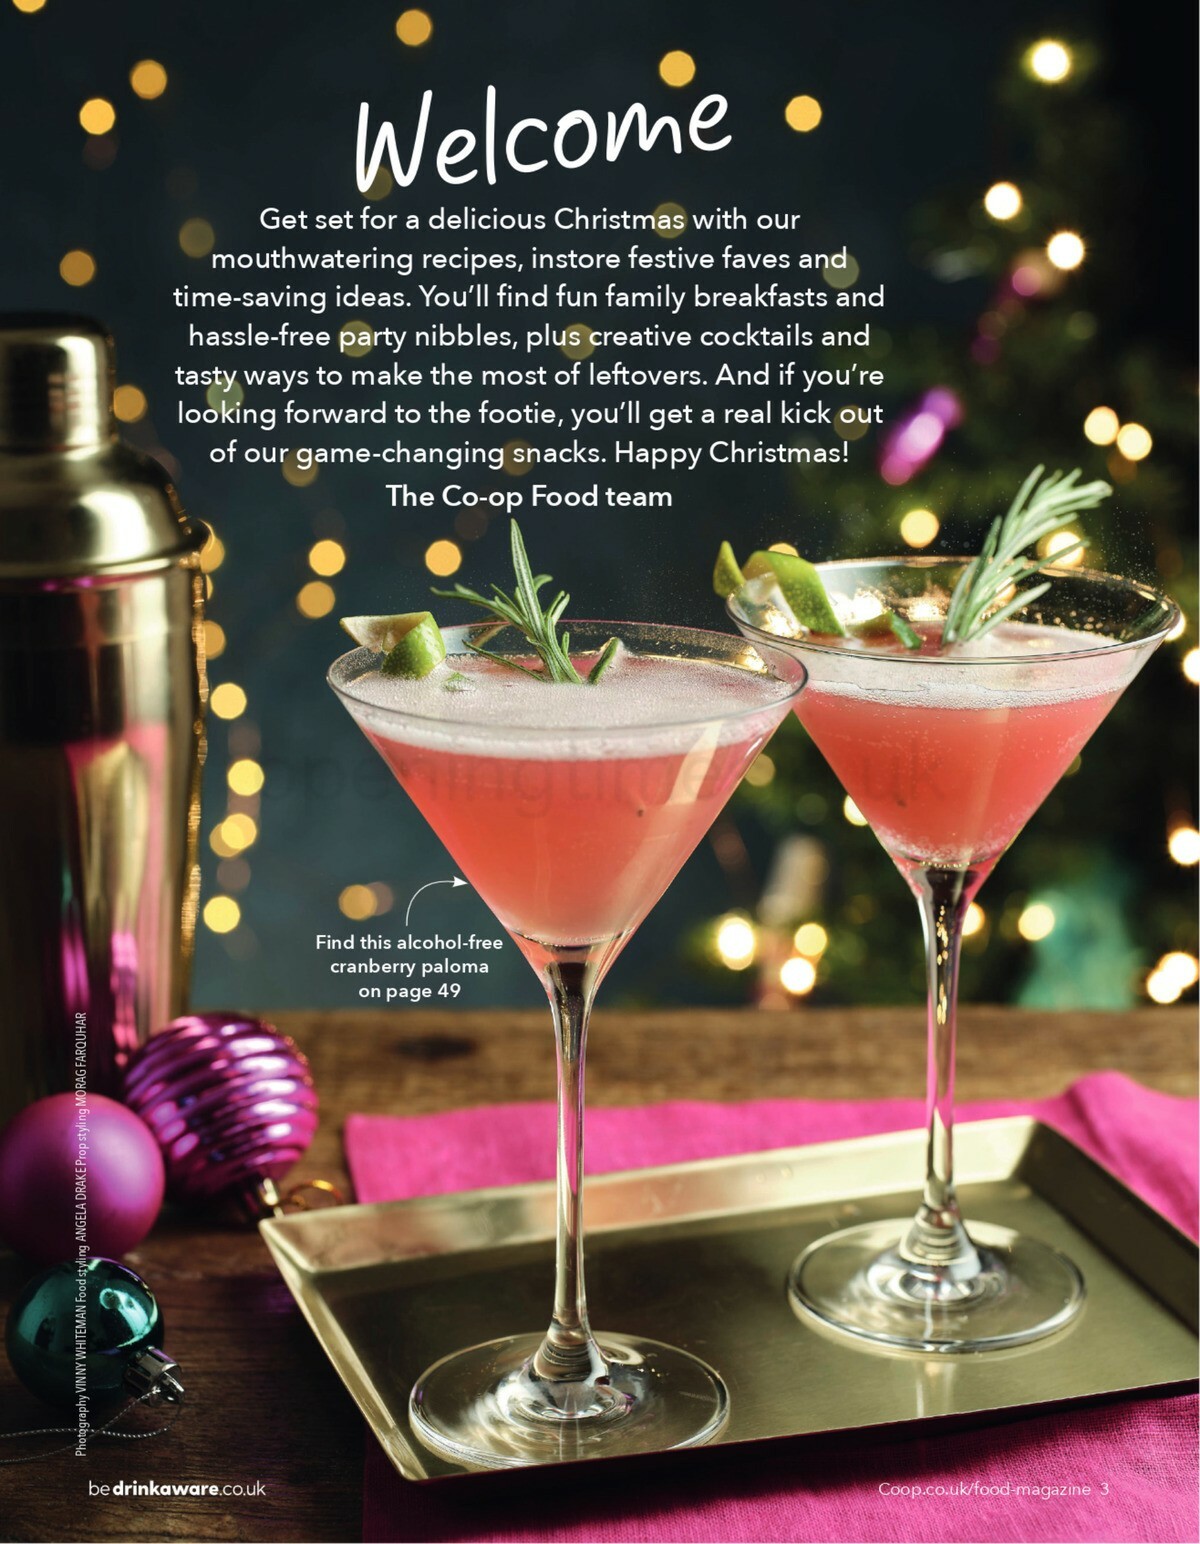 Co-op Food Magazine November/December Offers from 1 November